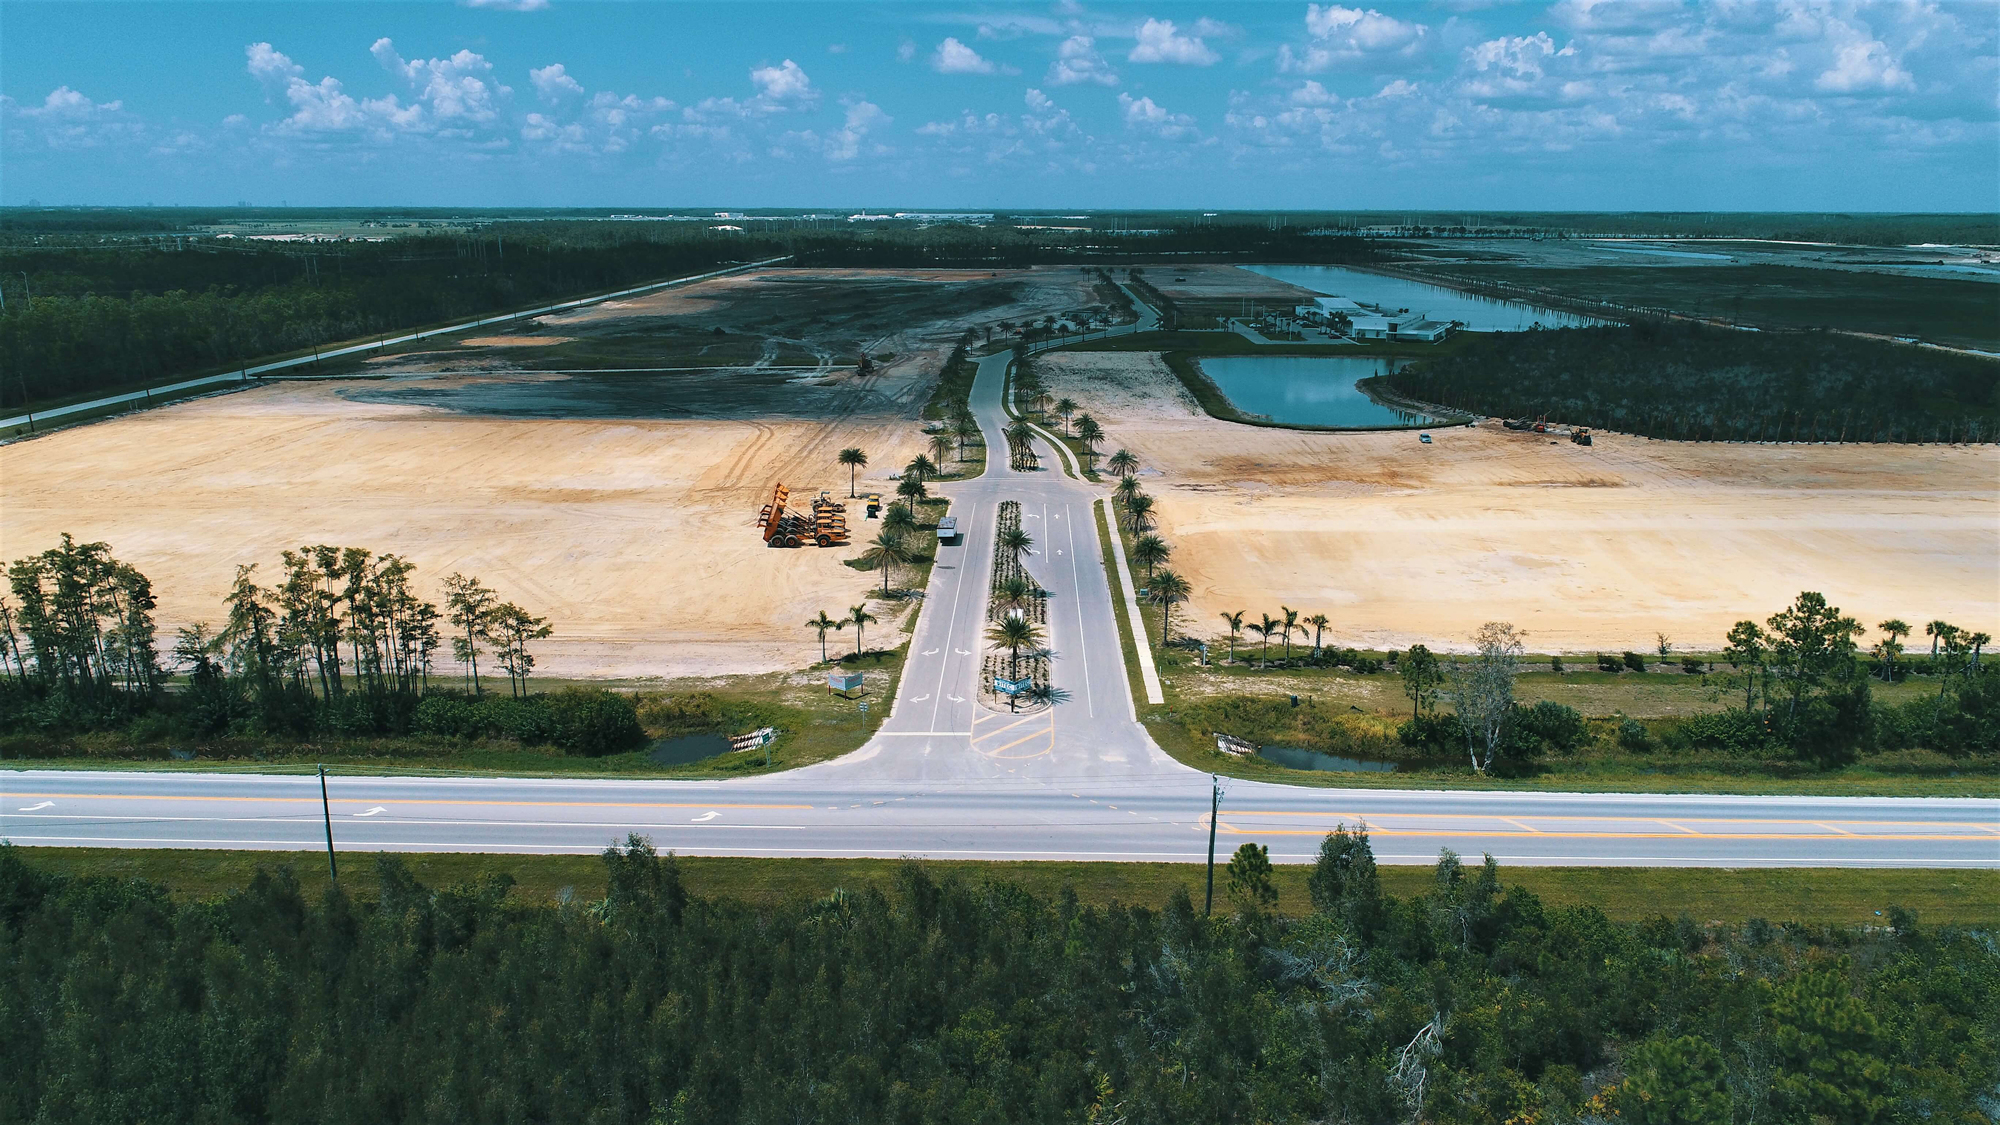 Alico ITEC Park is located between Alico Road (bottom) and Southwest Florida Regional Airport (top). Courtesy Alico ITEC Park.